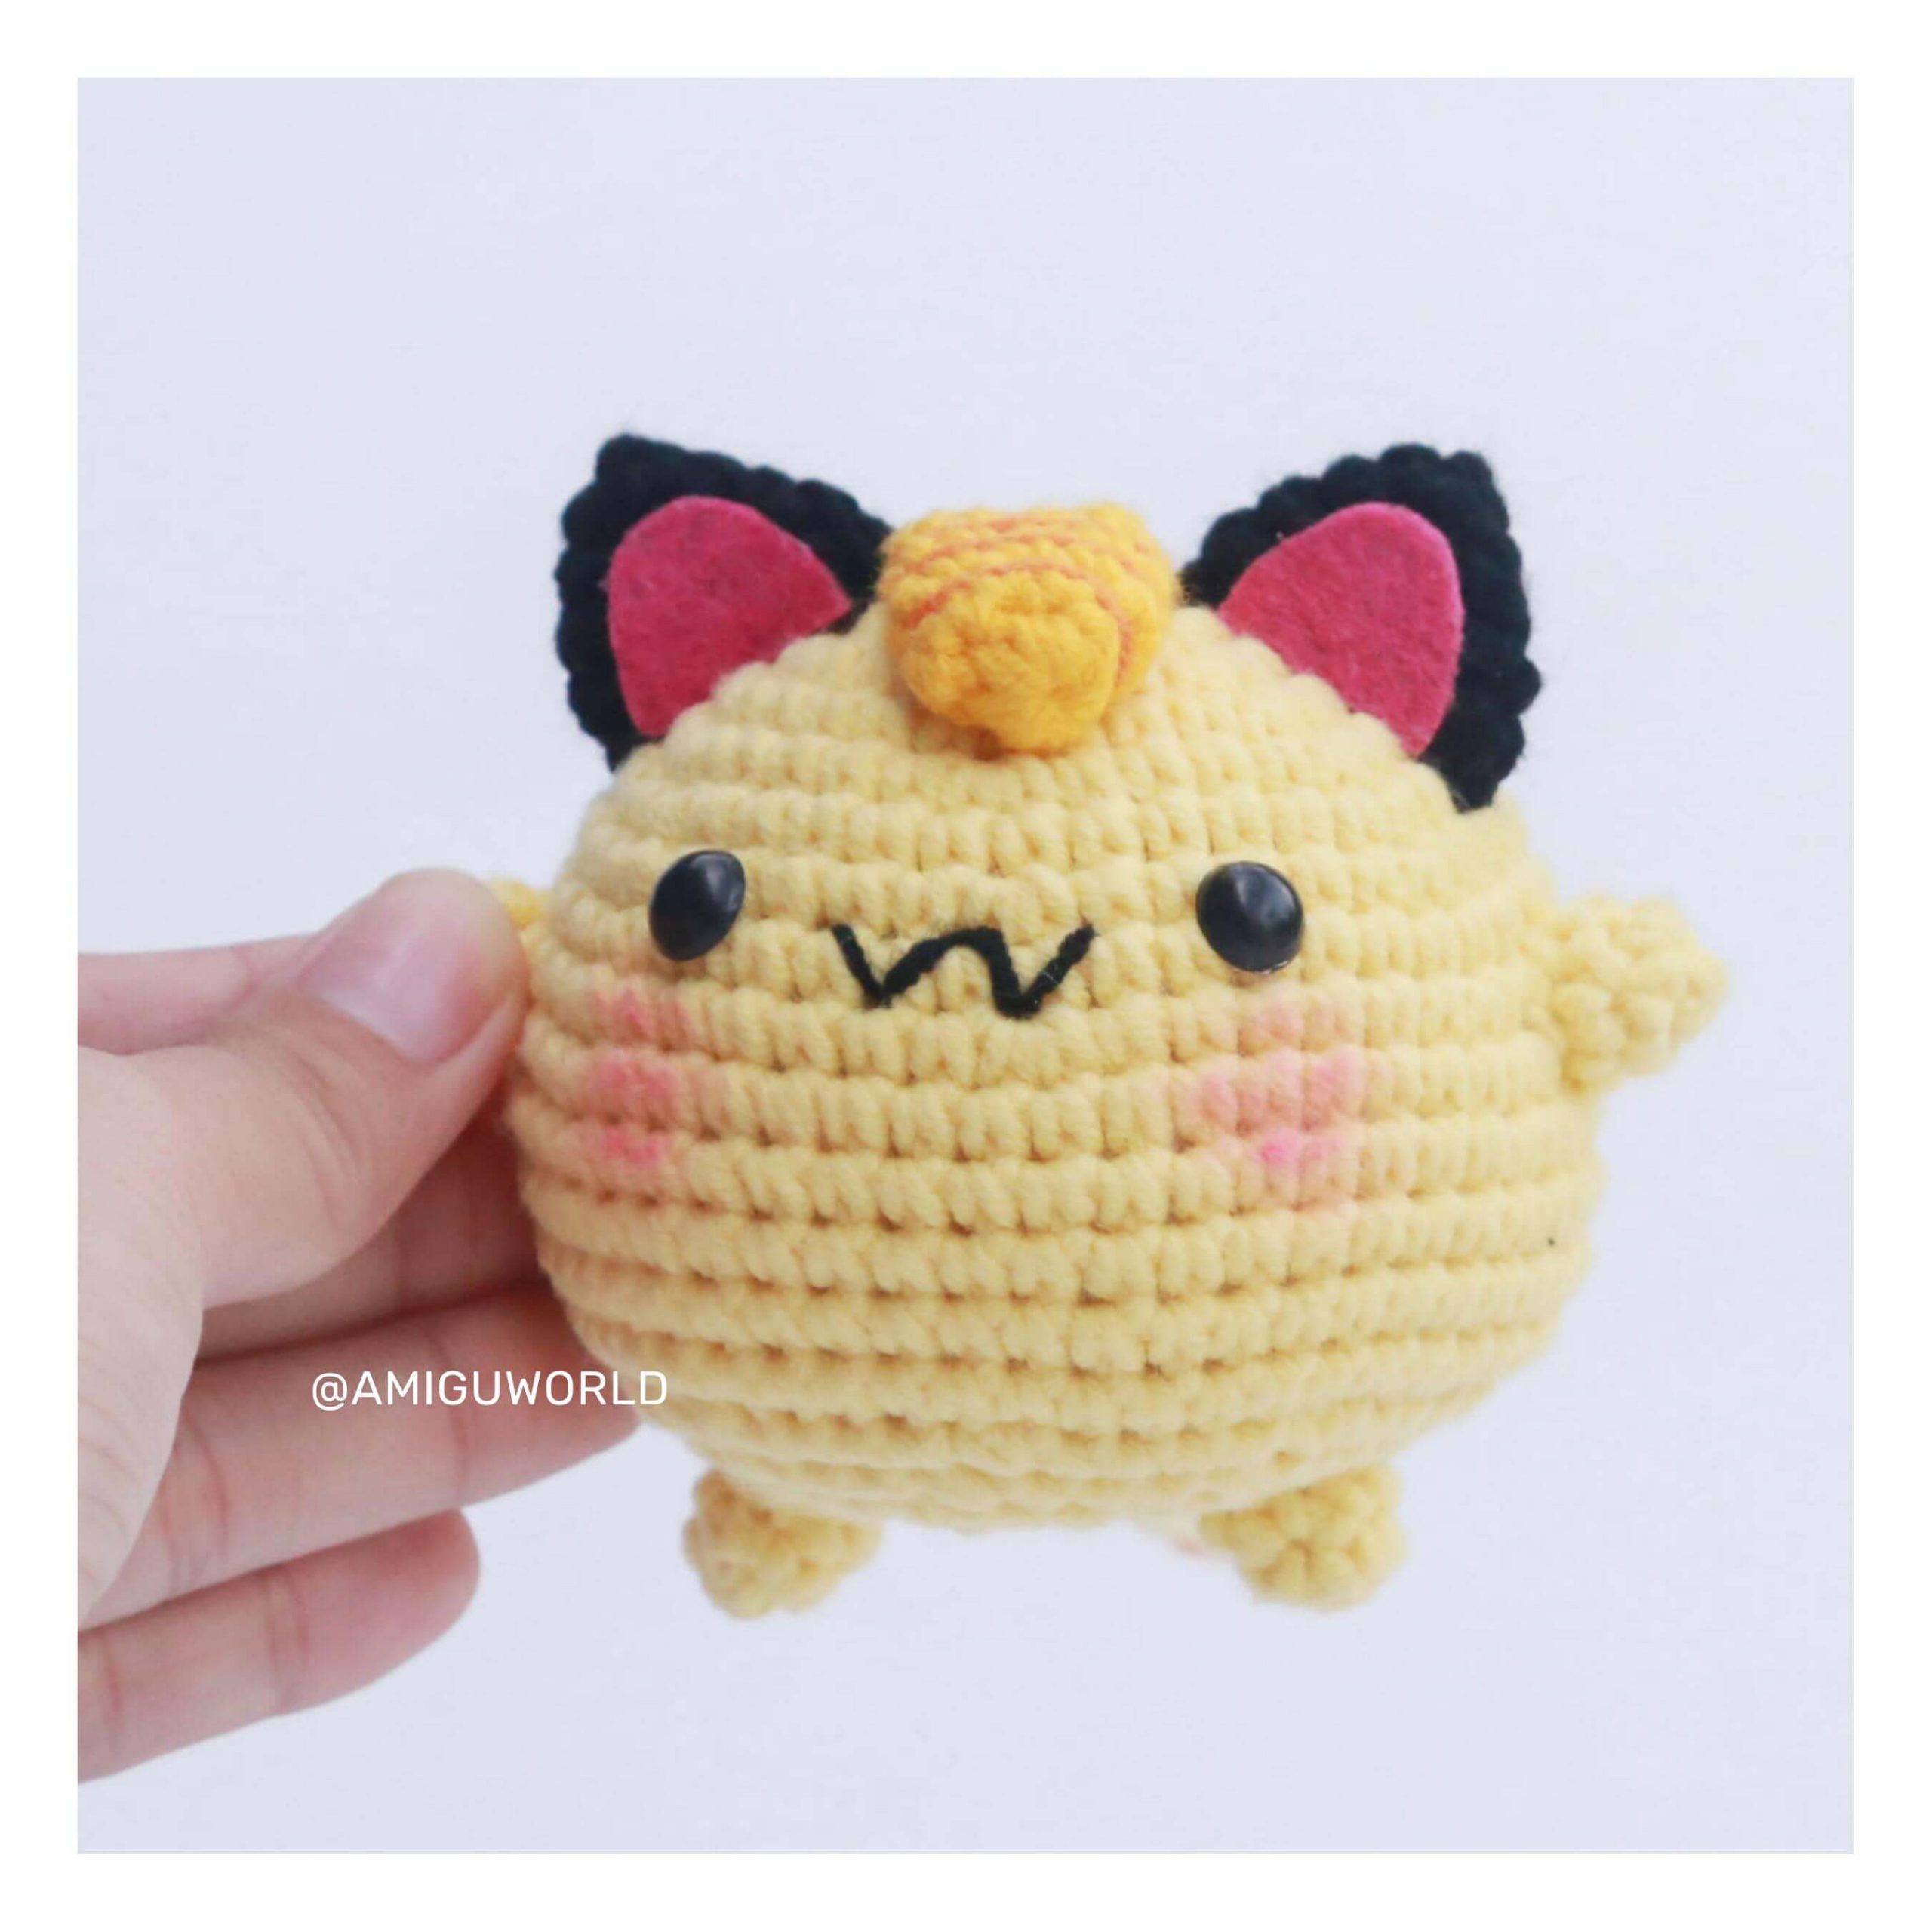 Meowth-amigurumi-crochet-pattern-by-AmiguWorld (3)